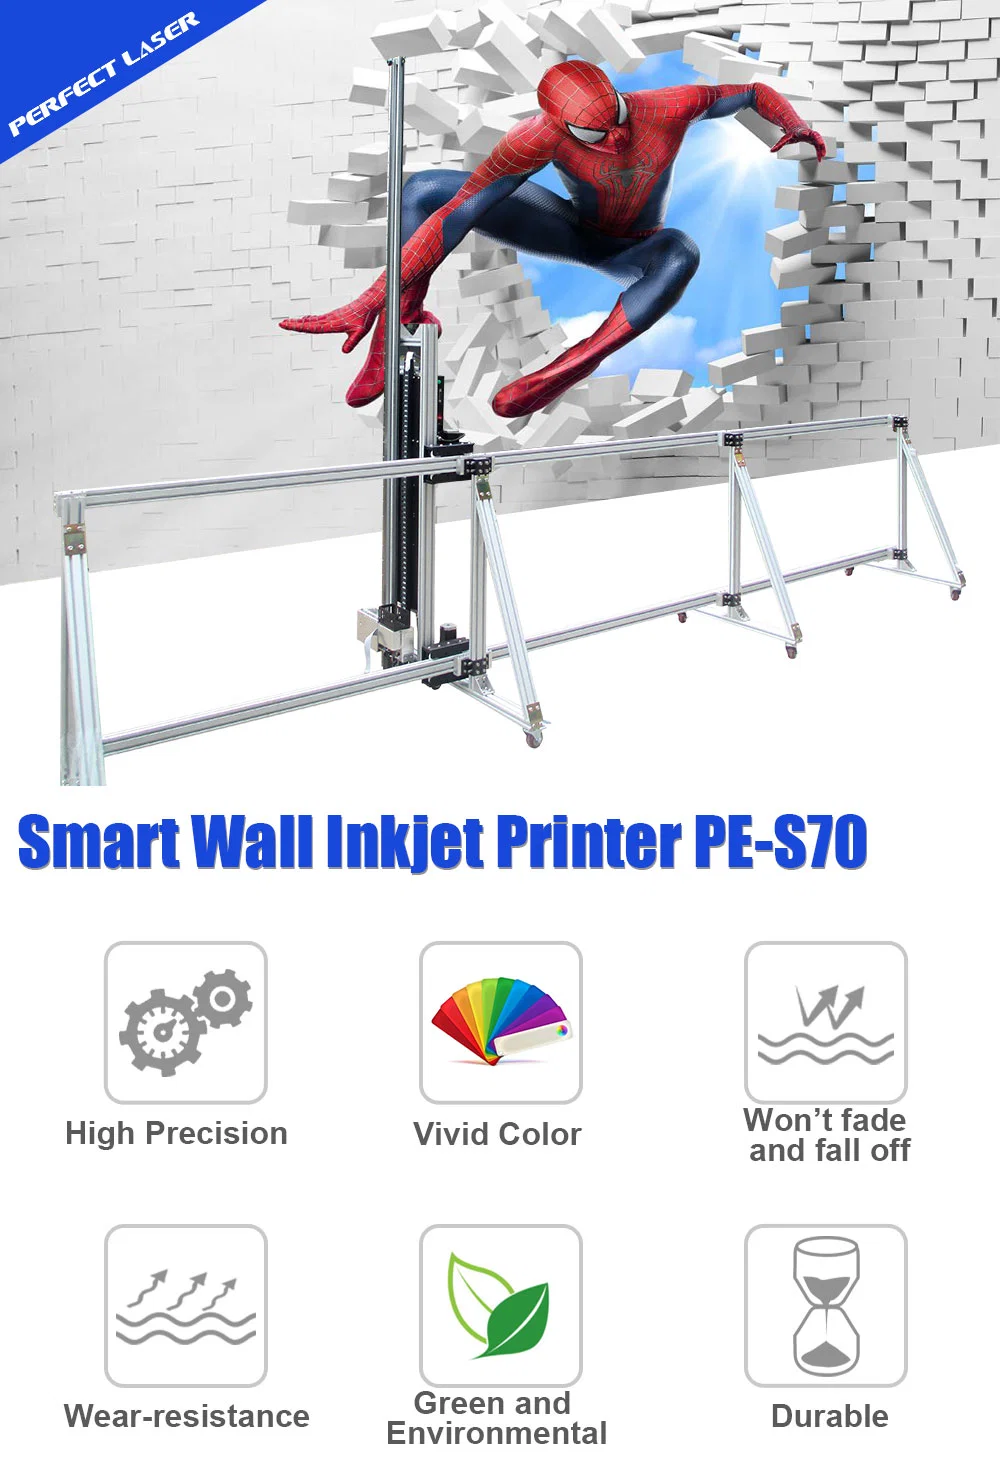 3D Vertical Mural Wall Inkjet Printer Painting Machine